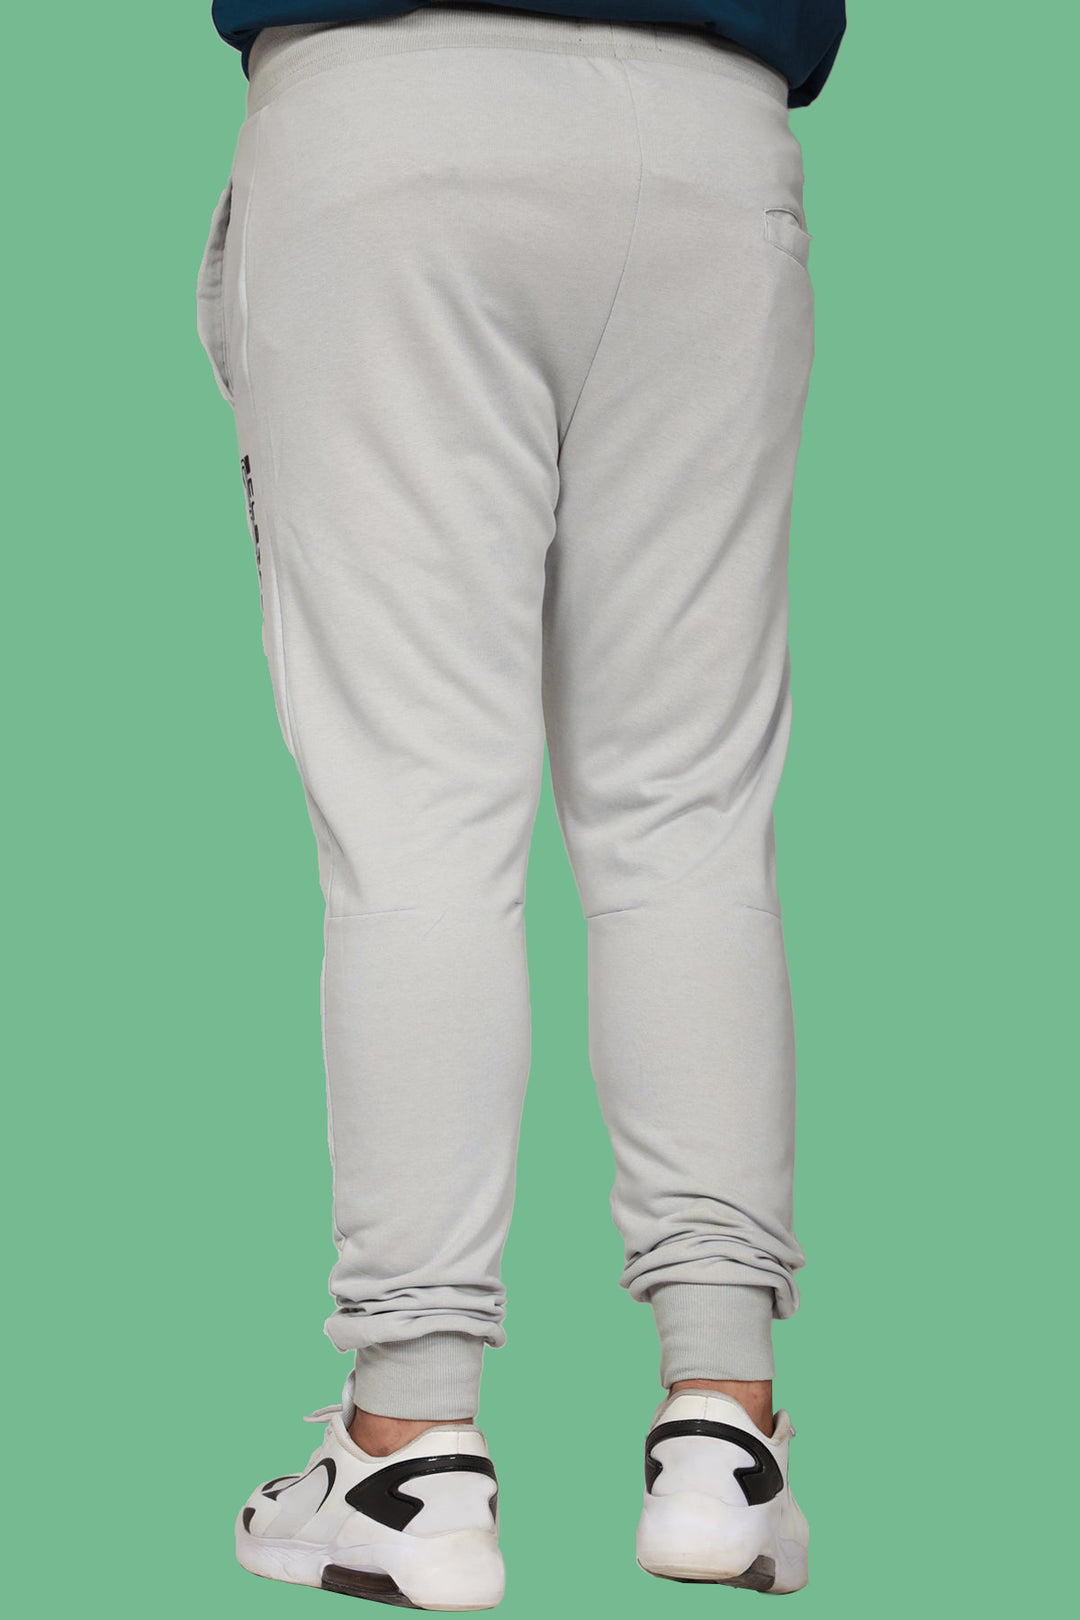 Rave Basic Gray Jog Pants (Plus Size) - S22 - MTR031P